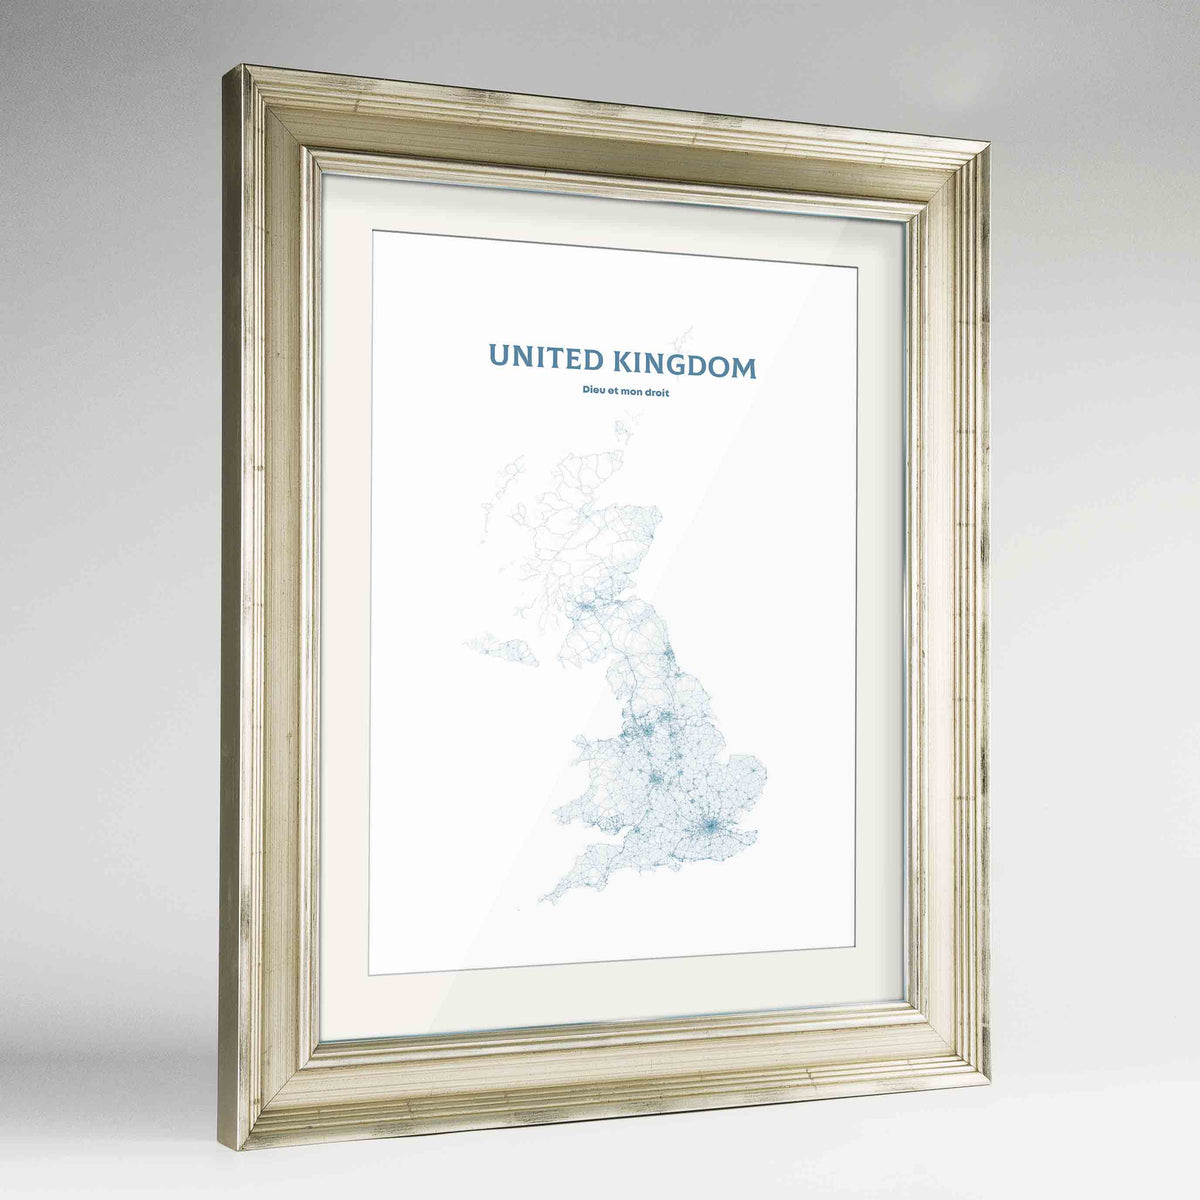 United Kingdom - All Roads Art Print - Framed